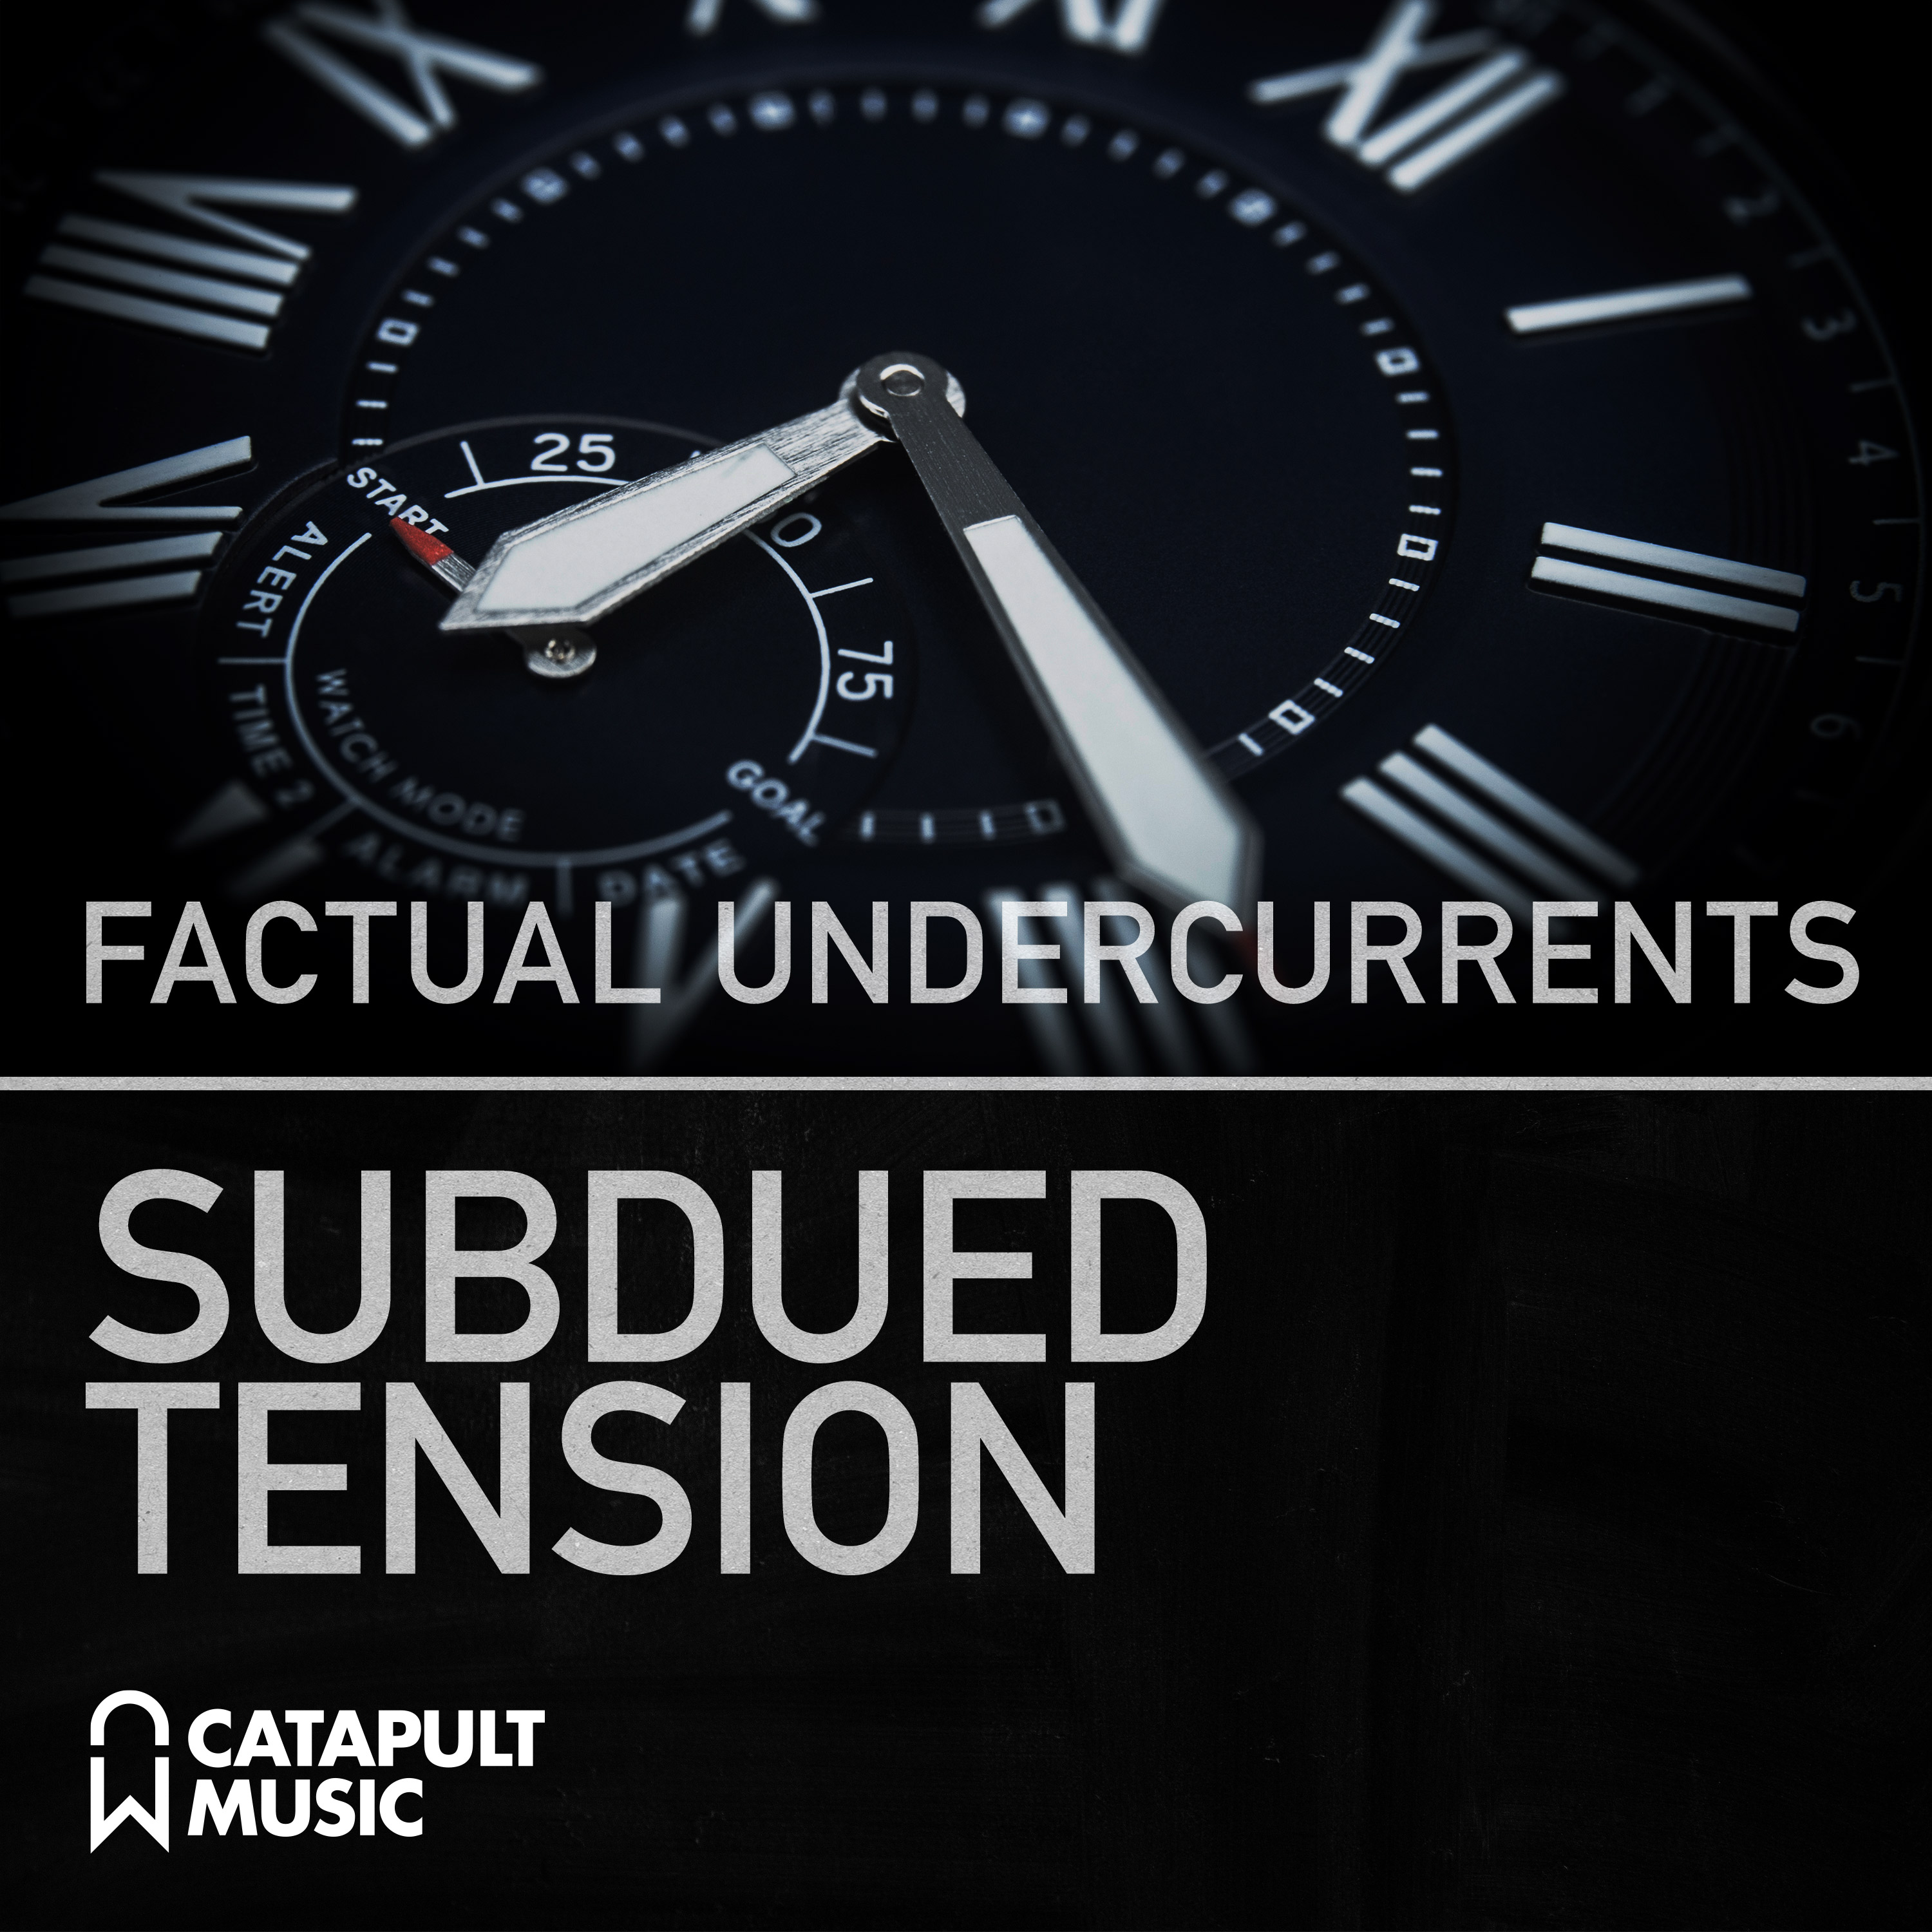 Factual Undercurrents - Subdued Tension